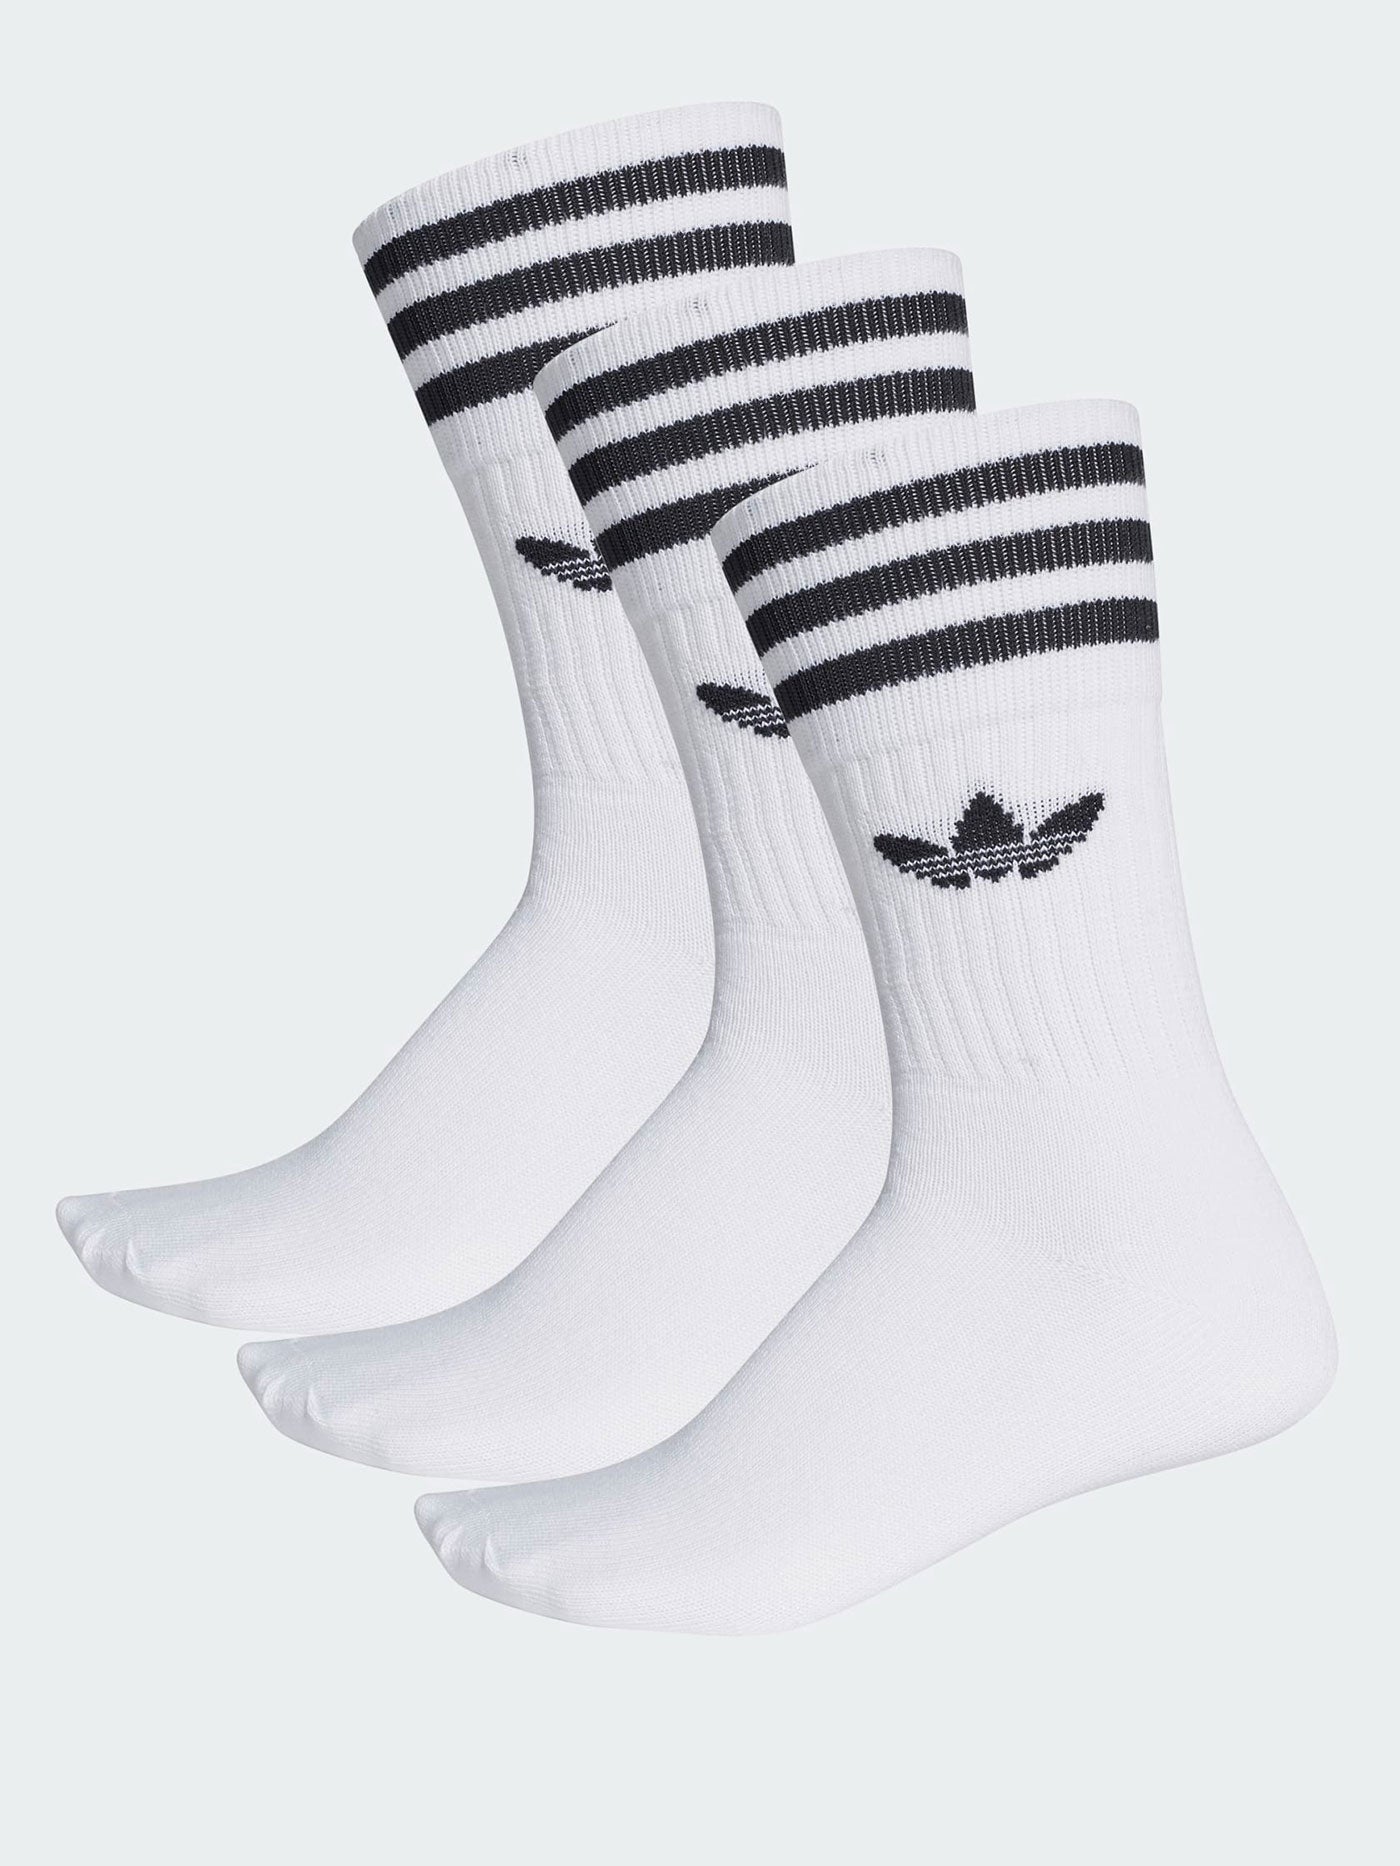 Adidas Solid Crew White/Black Socks